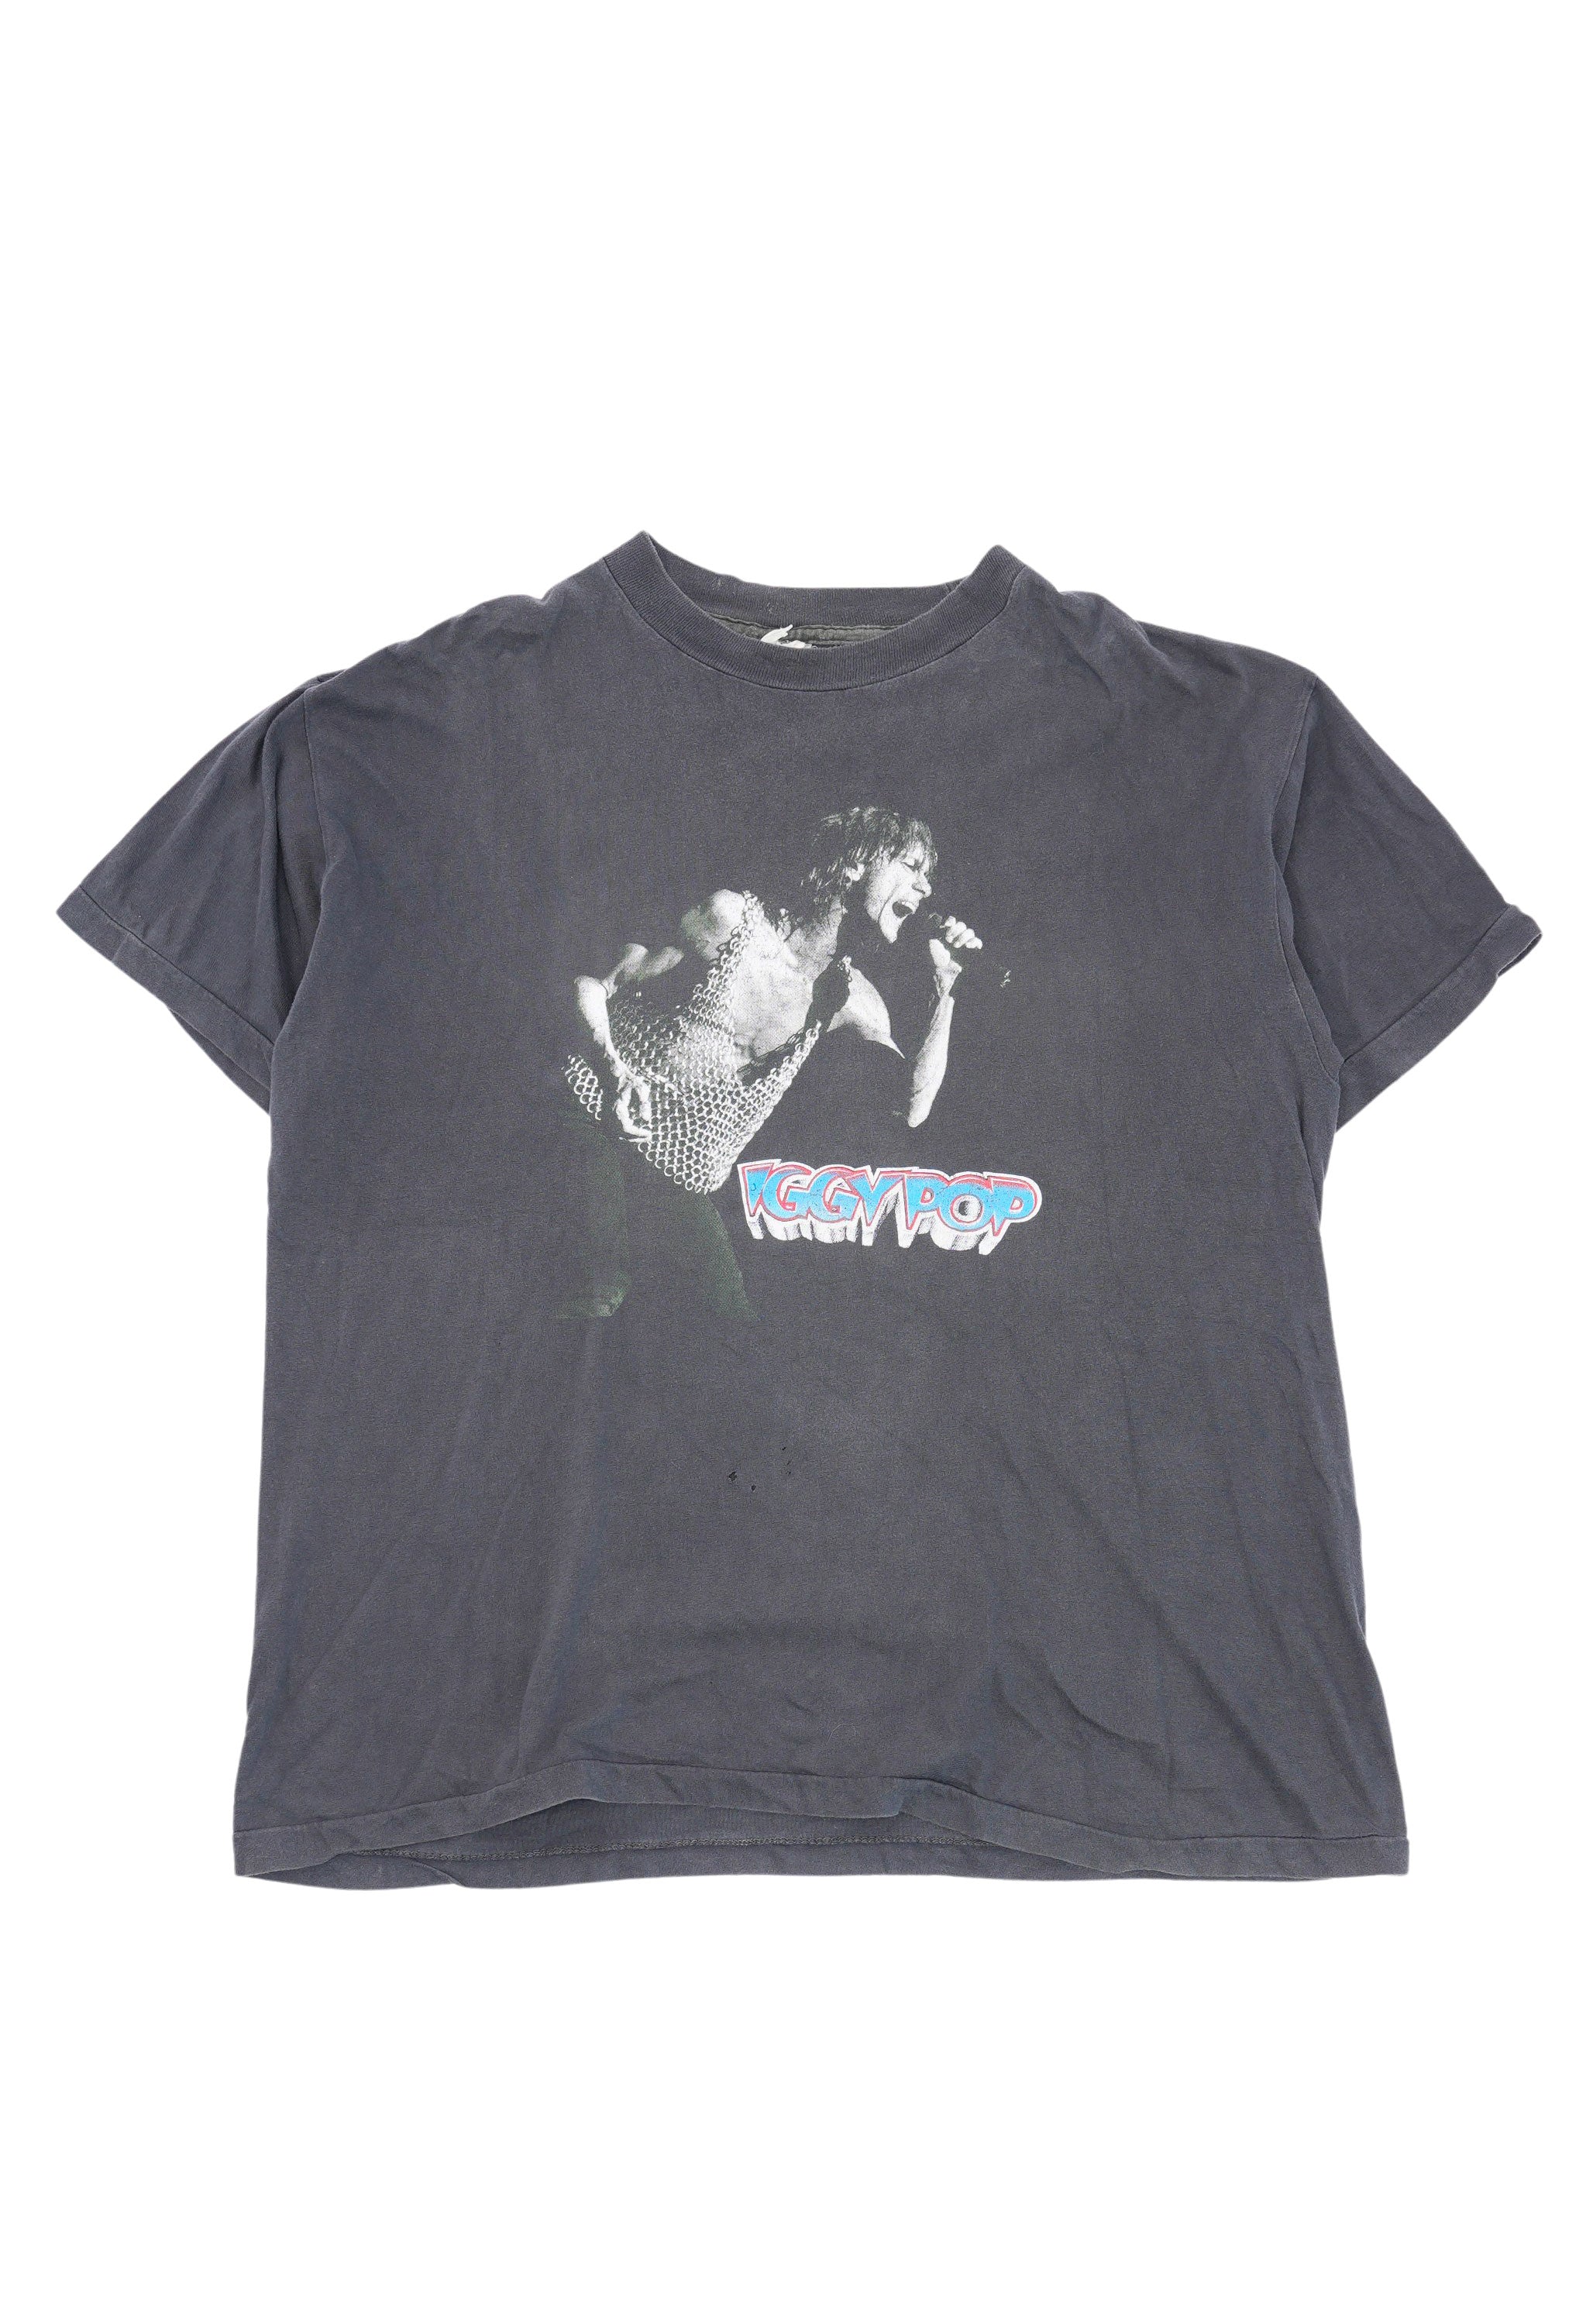 Iggy Pop 'Raw Fucking Power' T-Shirt